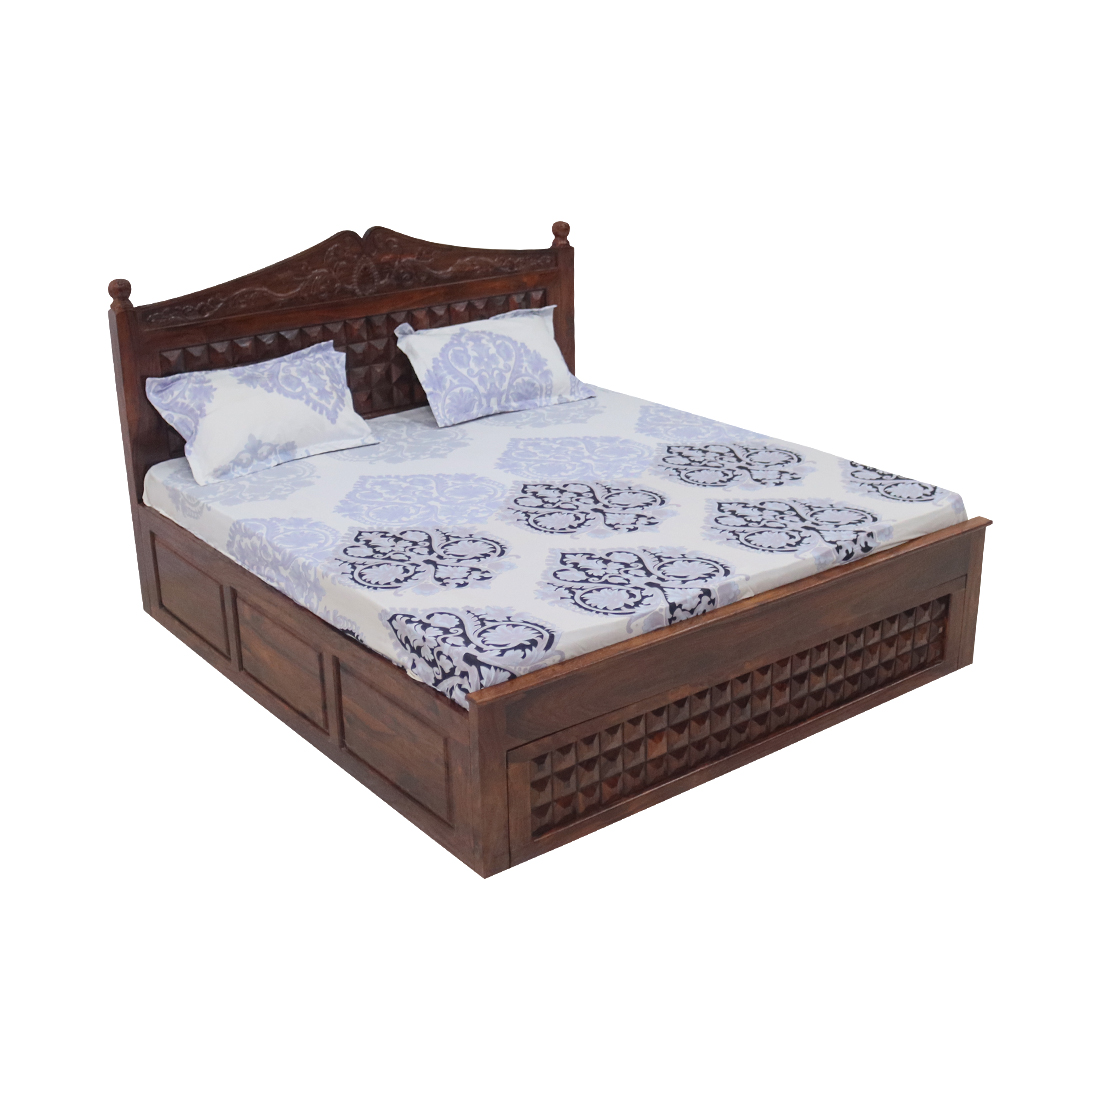 Queen Size Bed Teak Wood Finish - Carvin Head Box Pattam Box Storage